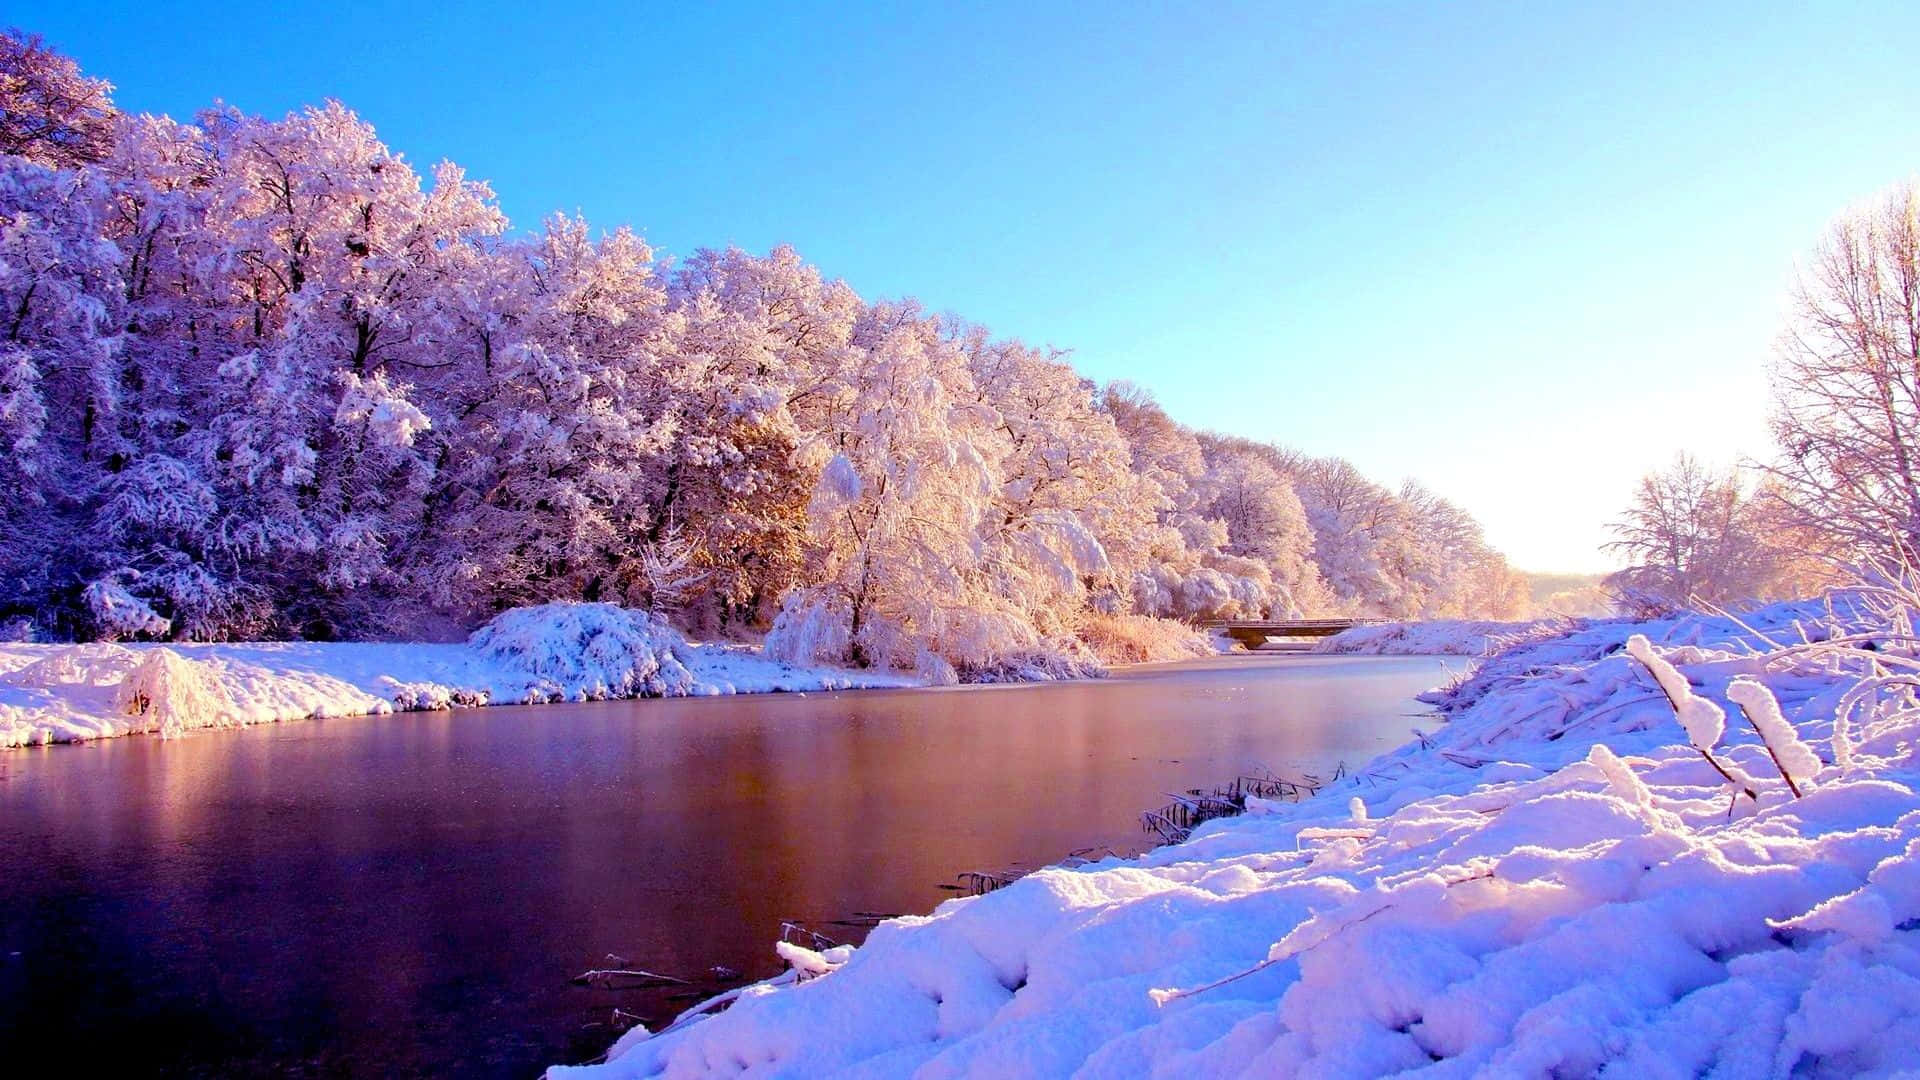 A blanket of snow creates a winter wonderland.